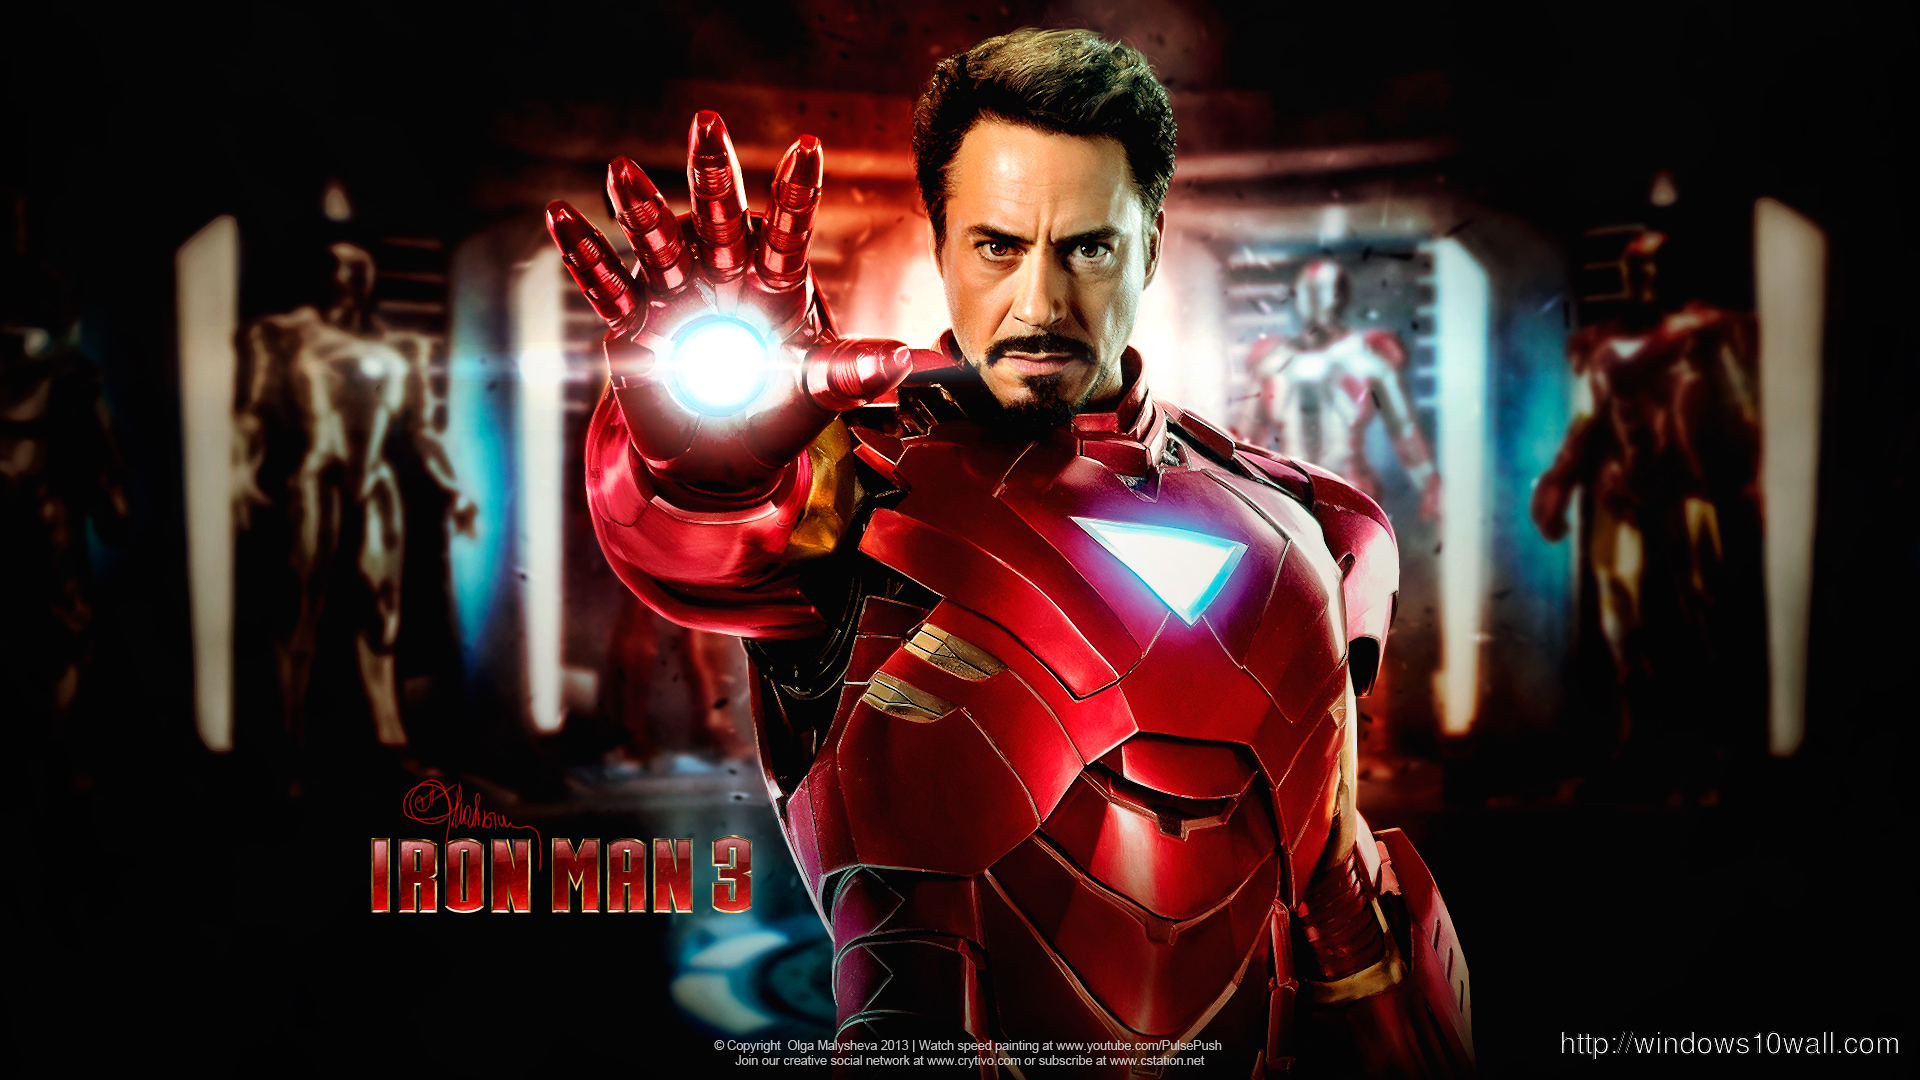 Iron man 3 Full HD Wallpapers